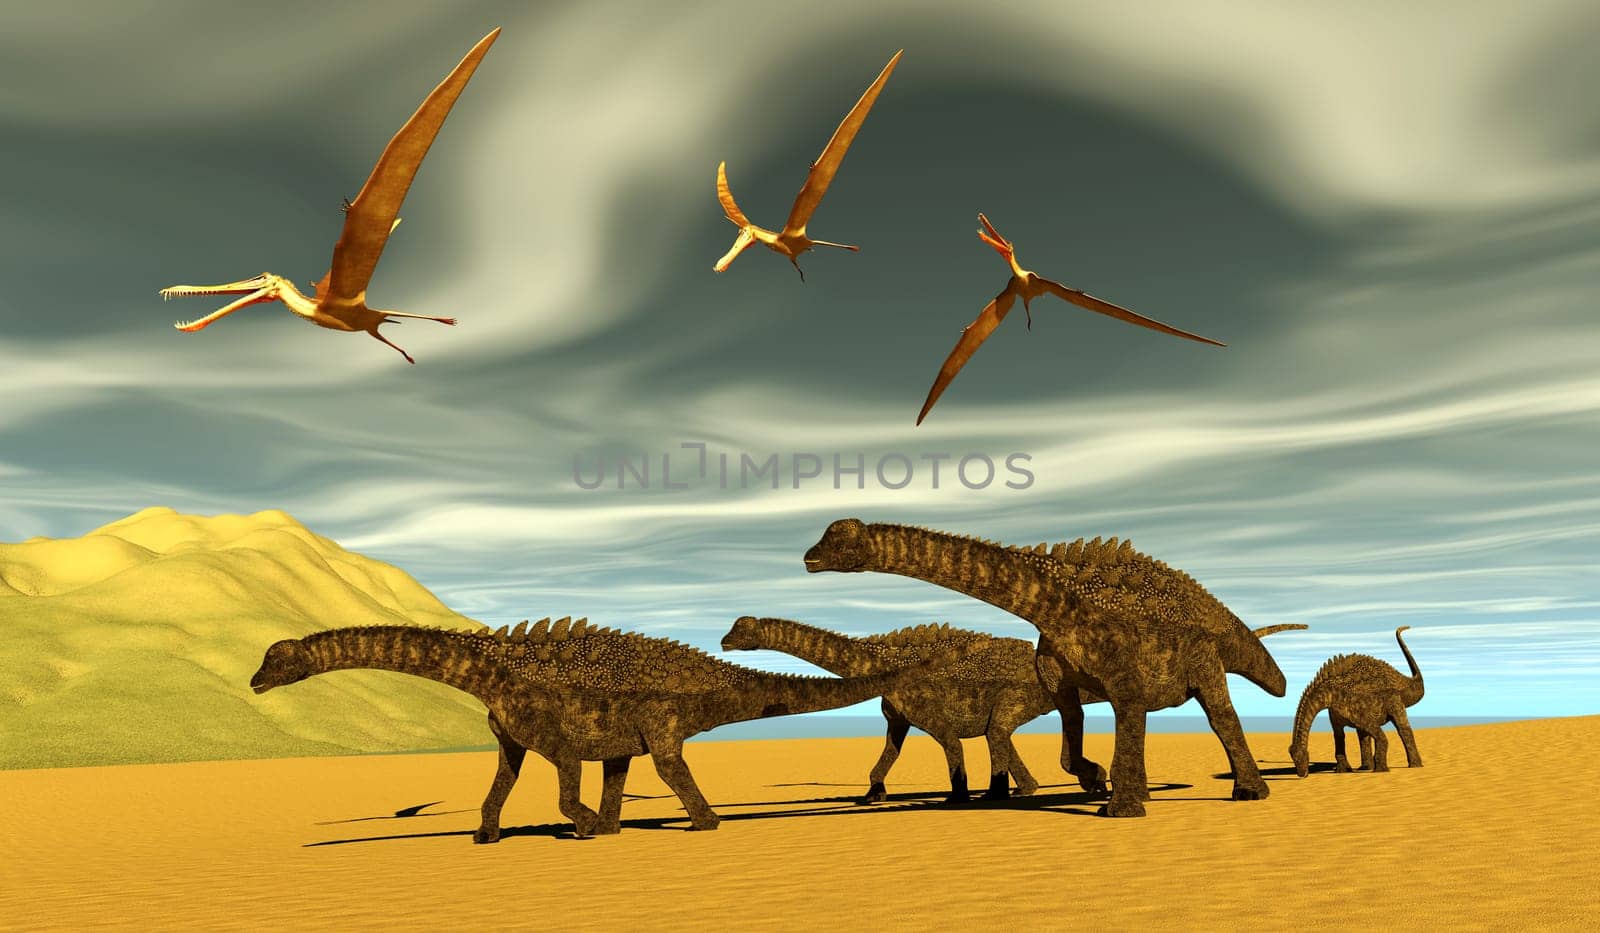 Ampelosaurus and Anhanguera Pterosaurs by Catmando